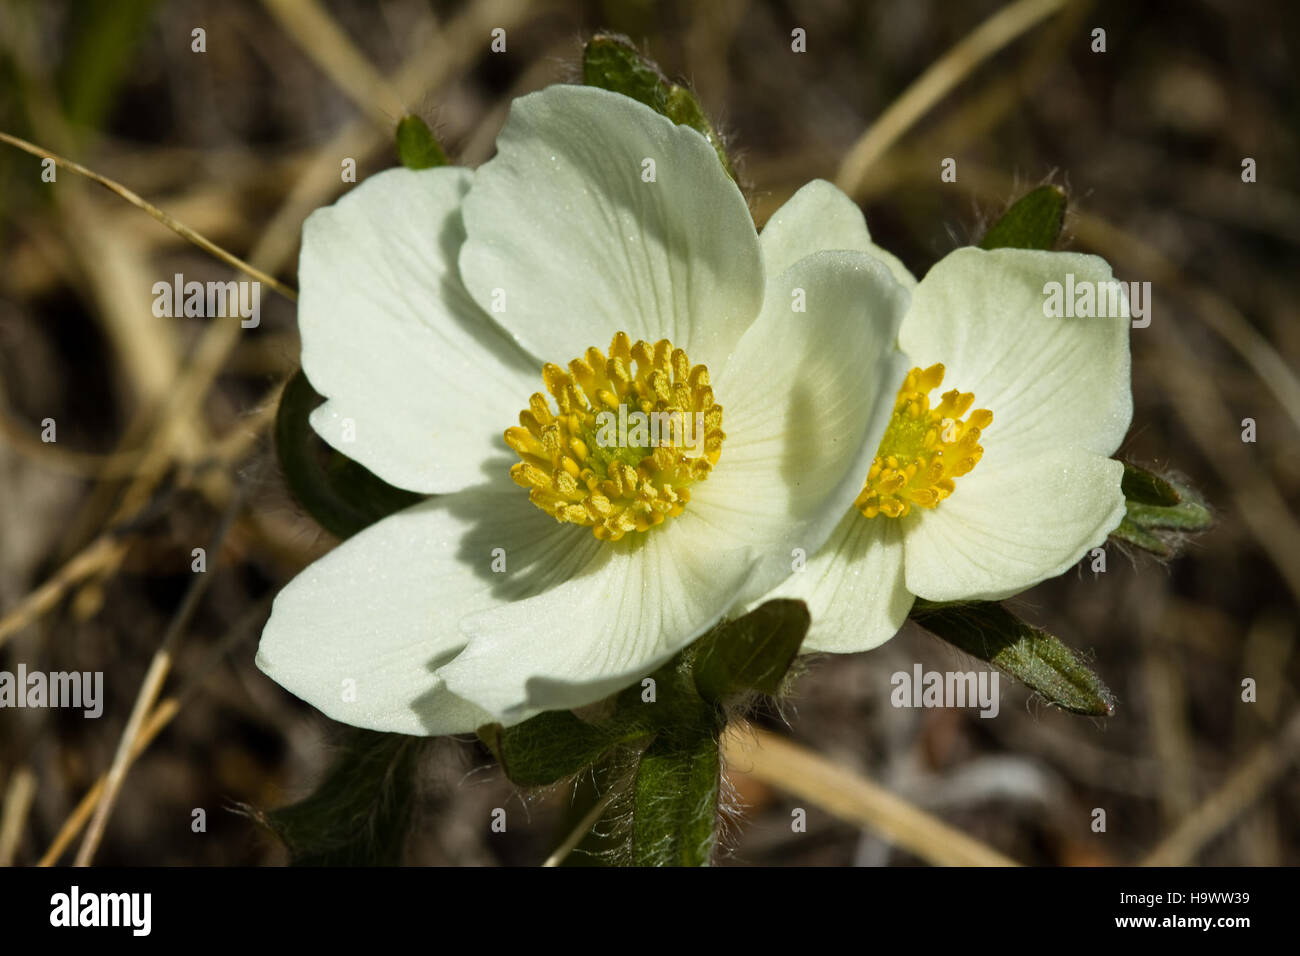 Narcissus-flowered Anemone Stock Photo